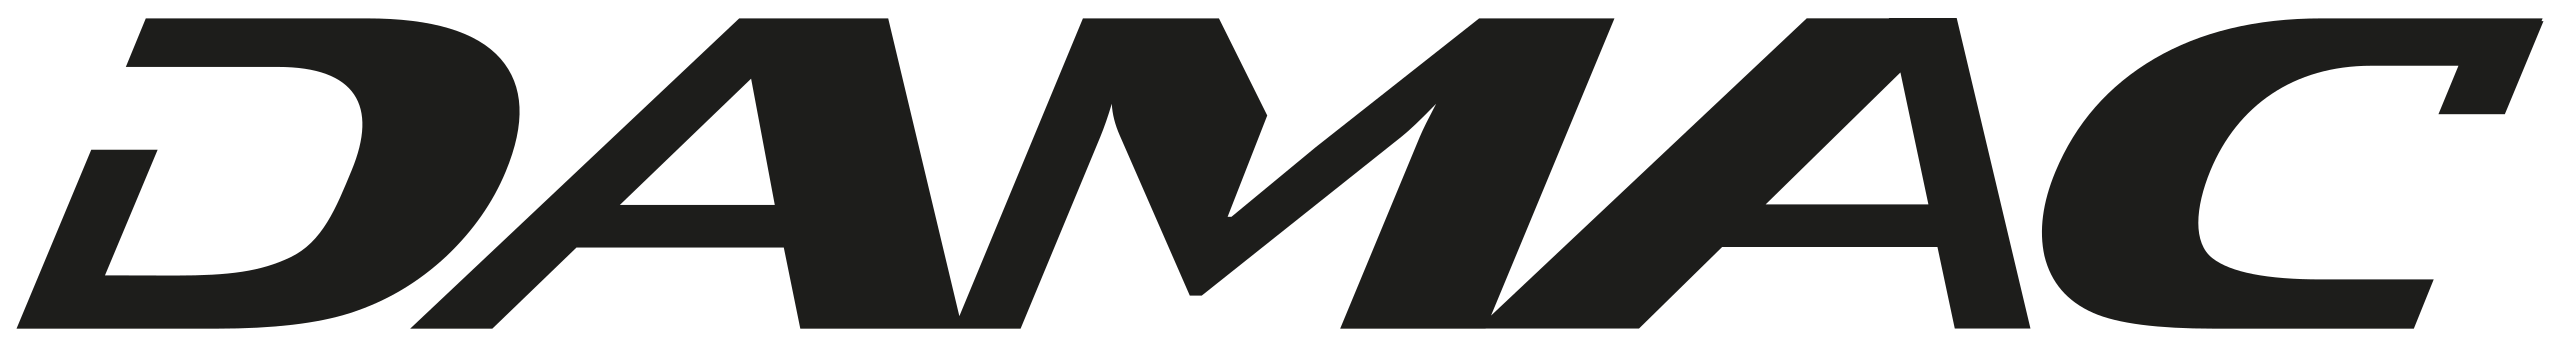 2560px-Damac_logo.svg